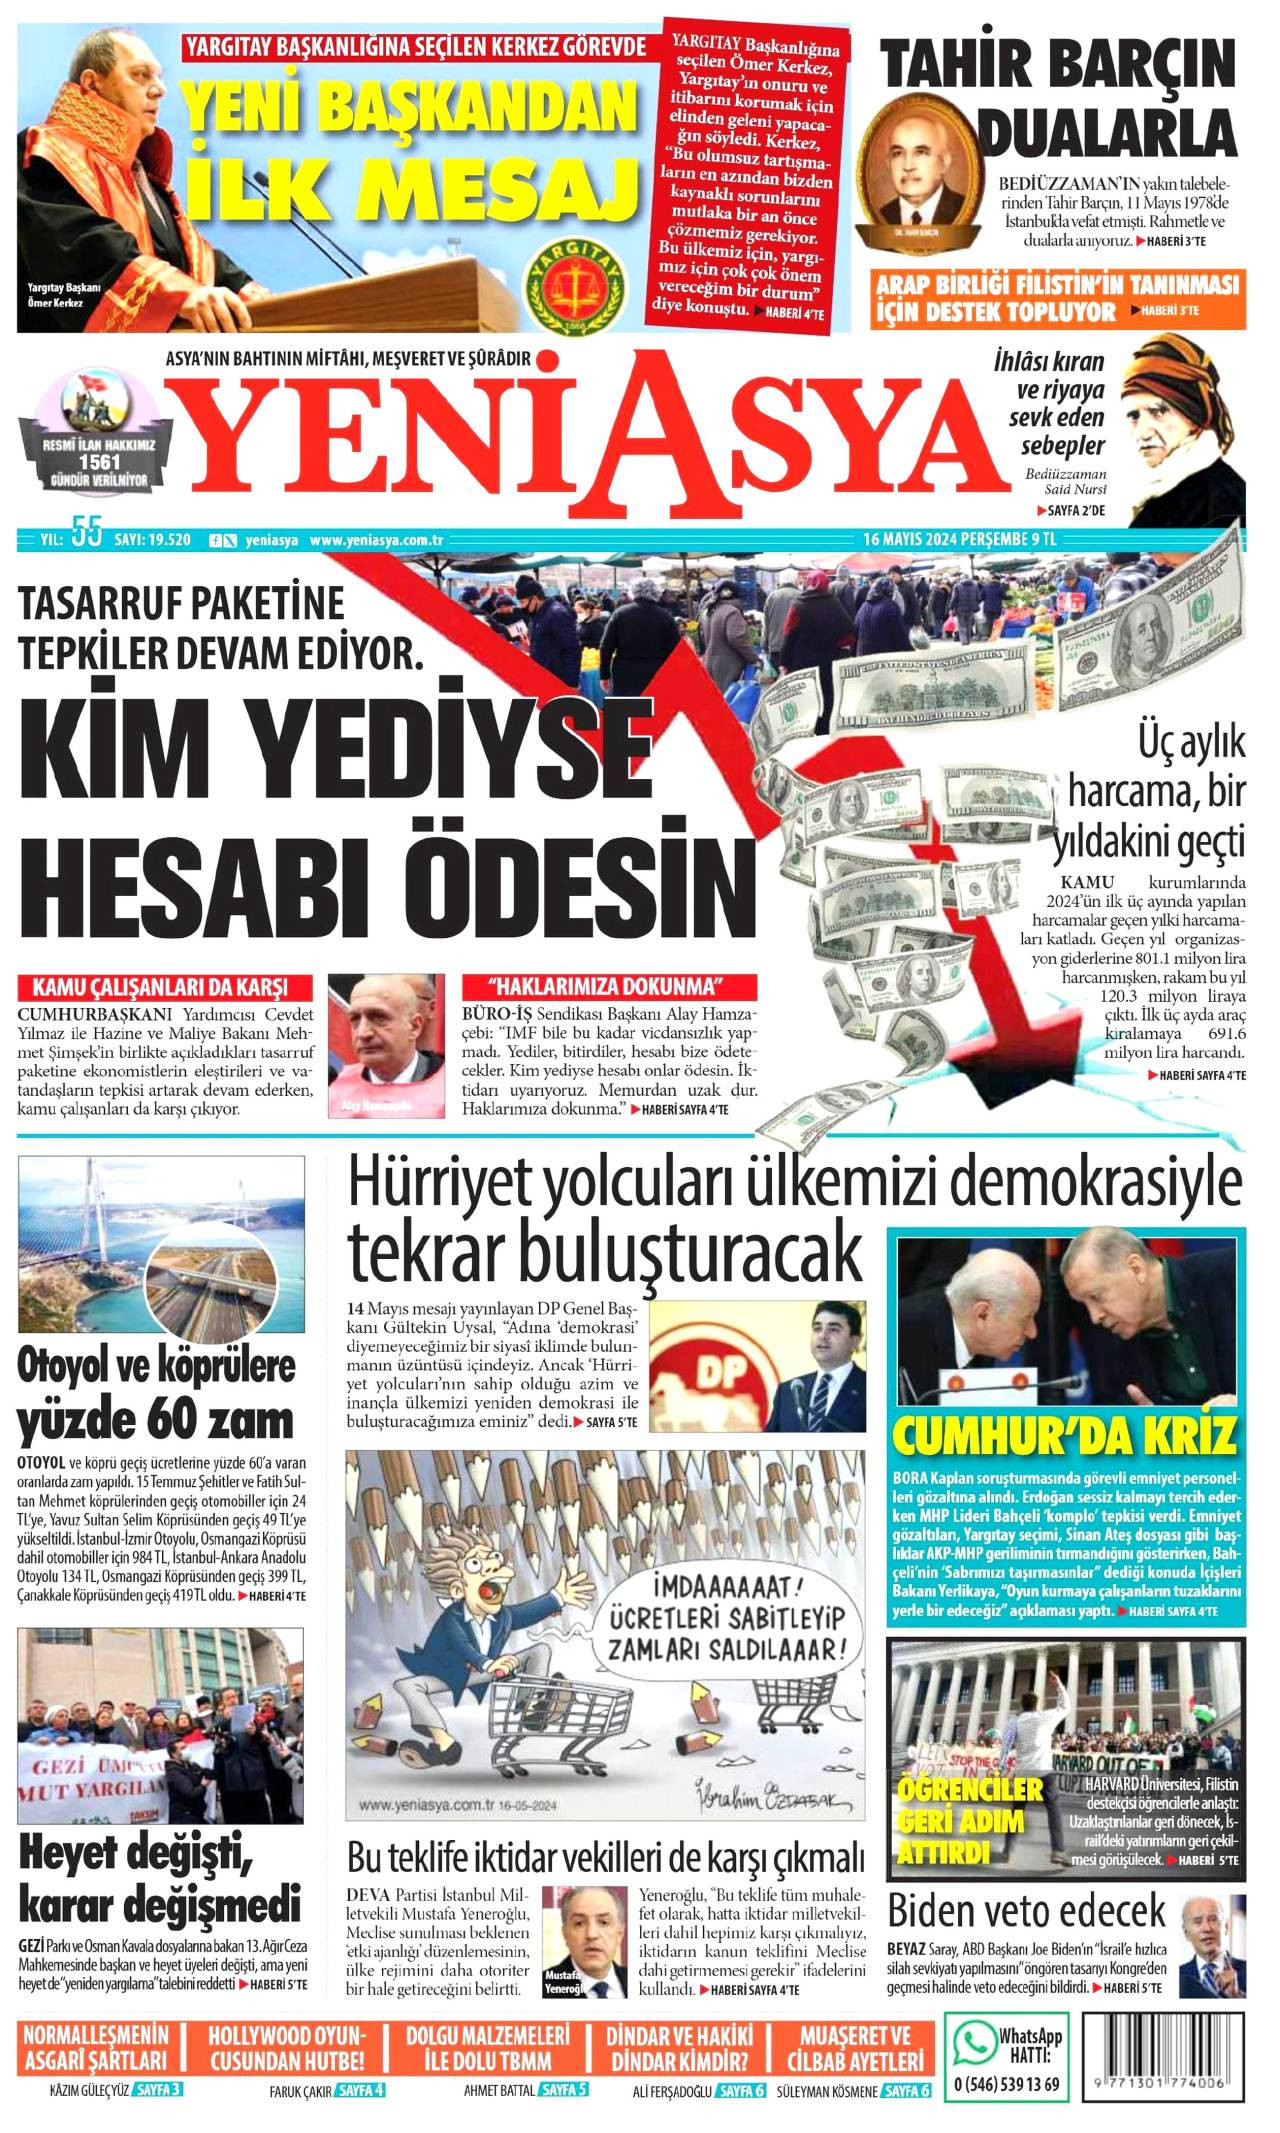  yeniasya Gazetesi